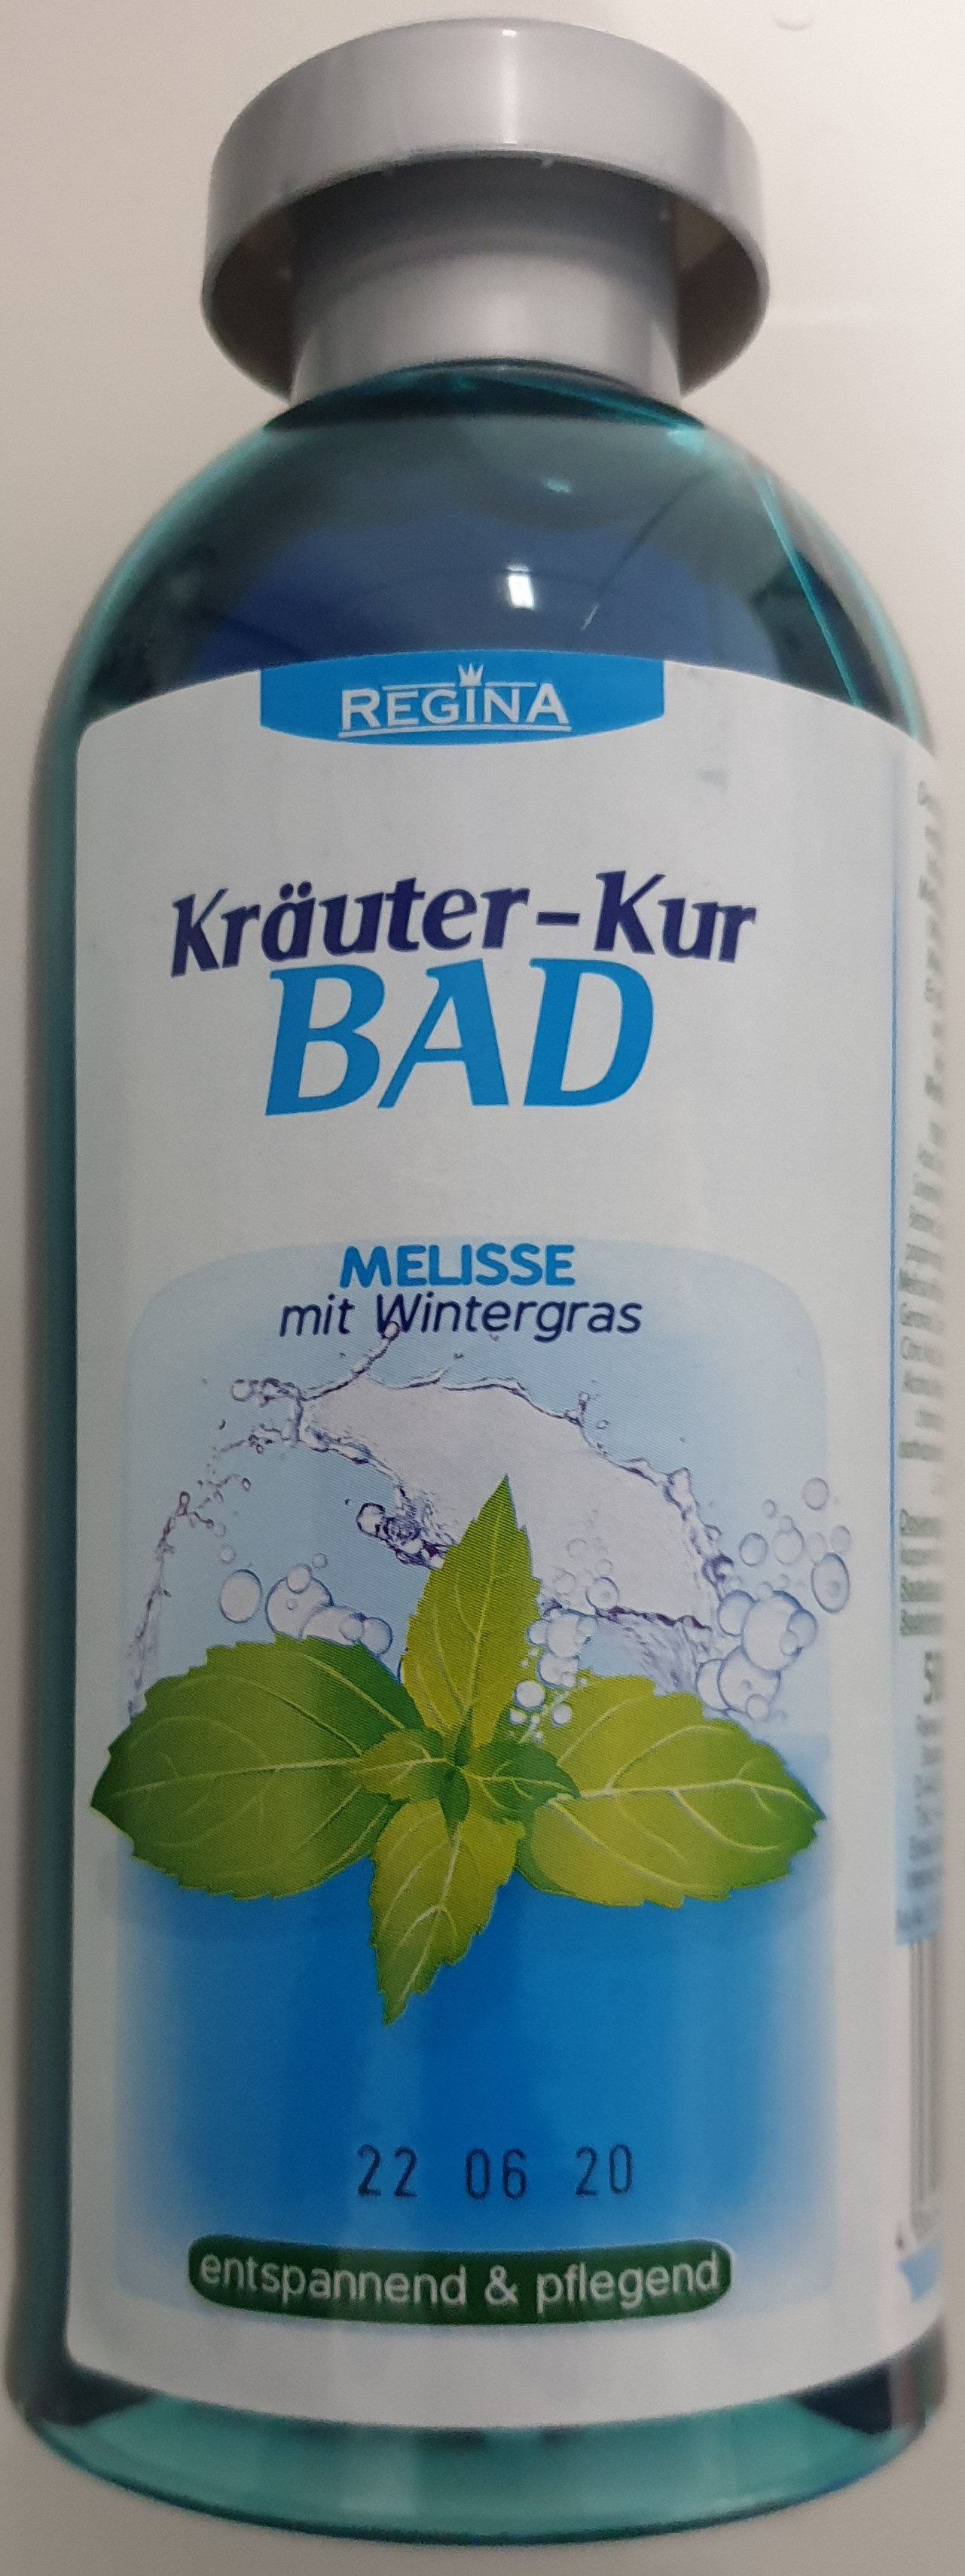 Kräuter-Kur Bad Melisse mit Wintergras - Produit - de